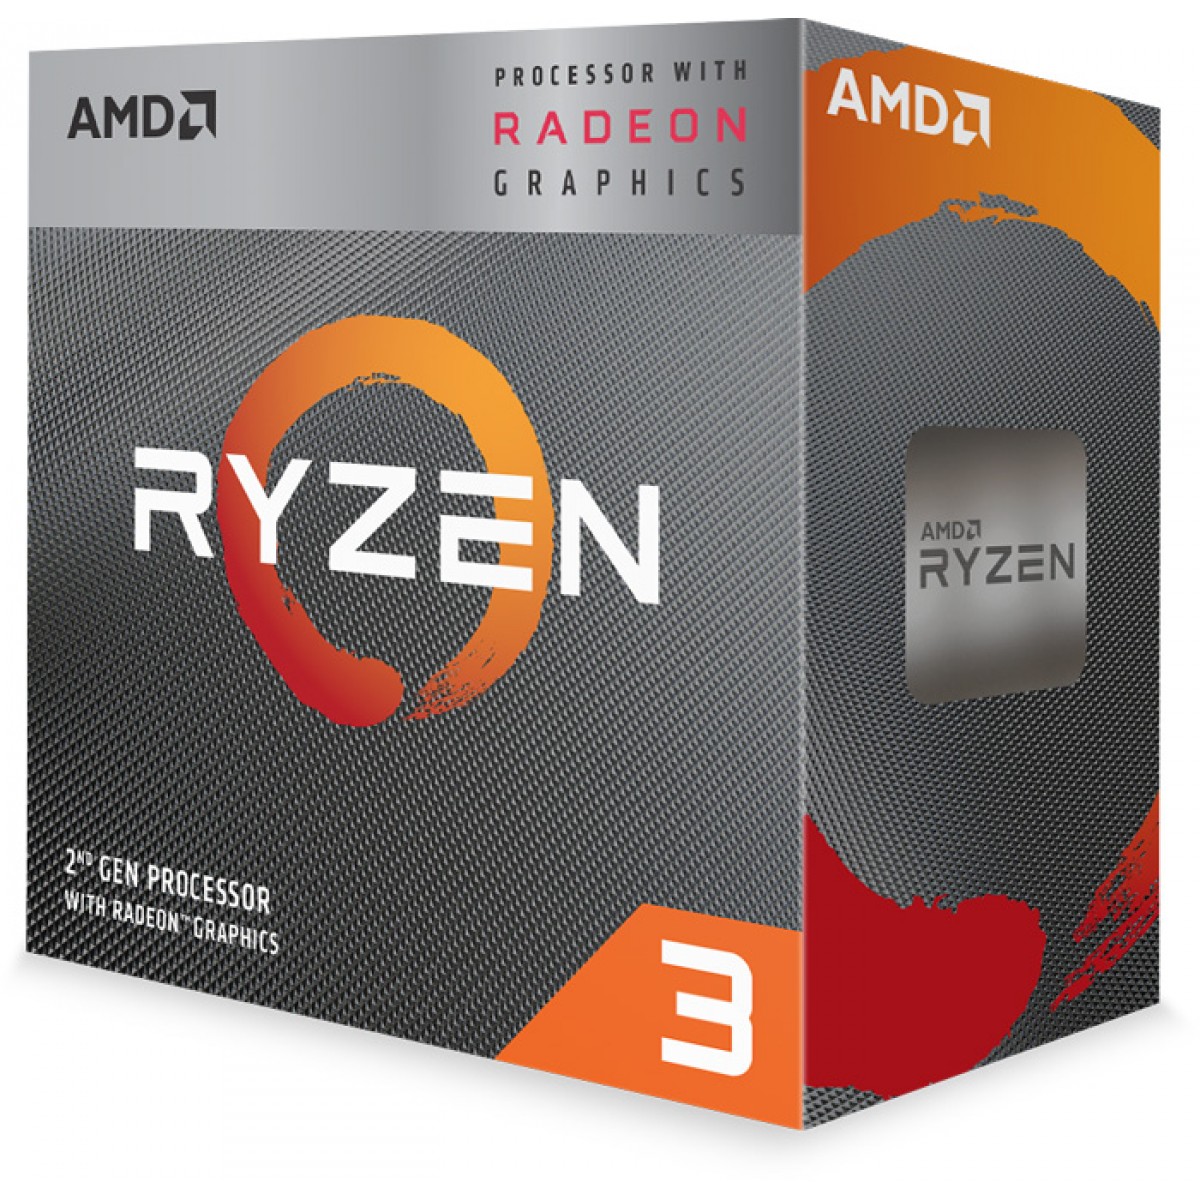 Processador AMD Ryzen 3 3200G 3.6GHz (4.0GHz Turbo), 4-Cores 4-Threads, Cooler Wraith Stealth, AM4 - Open Box